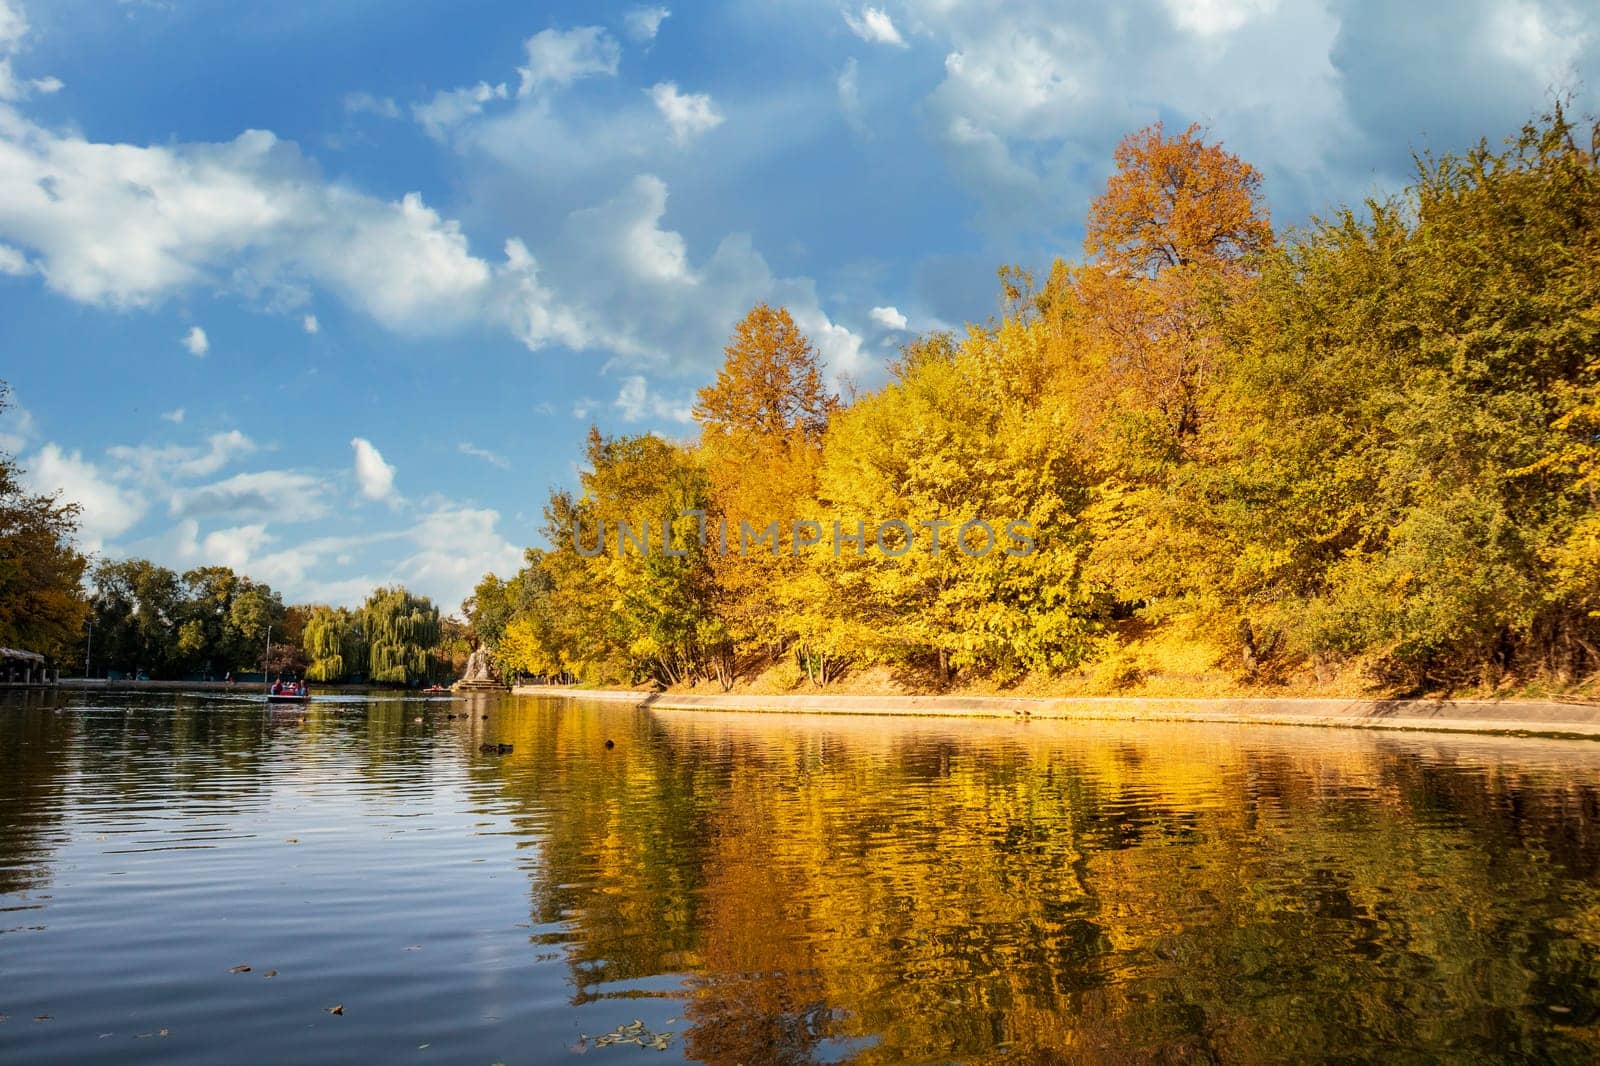 Picturesque Autumn lake in Central Park, Gorky Park, of Almaty, Kazakhstan by Rom4ek